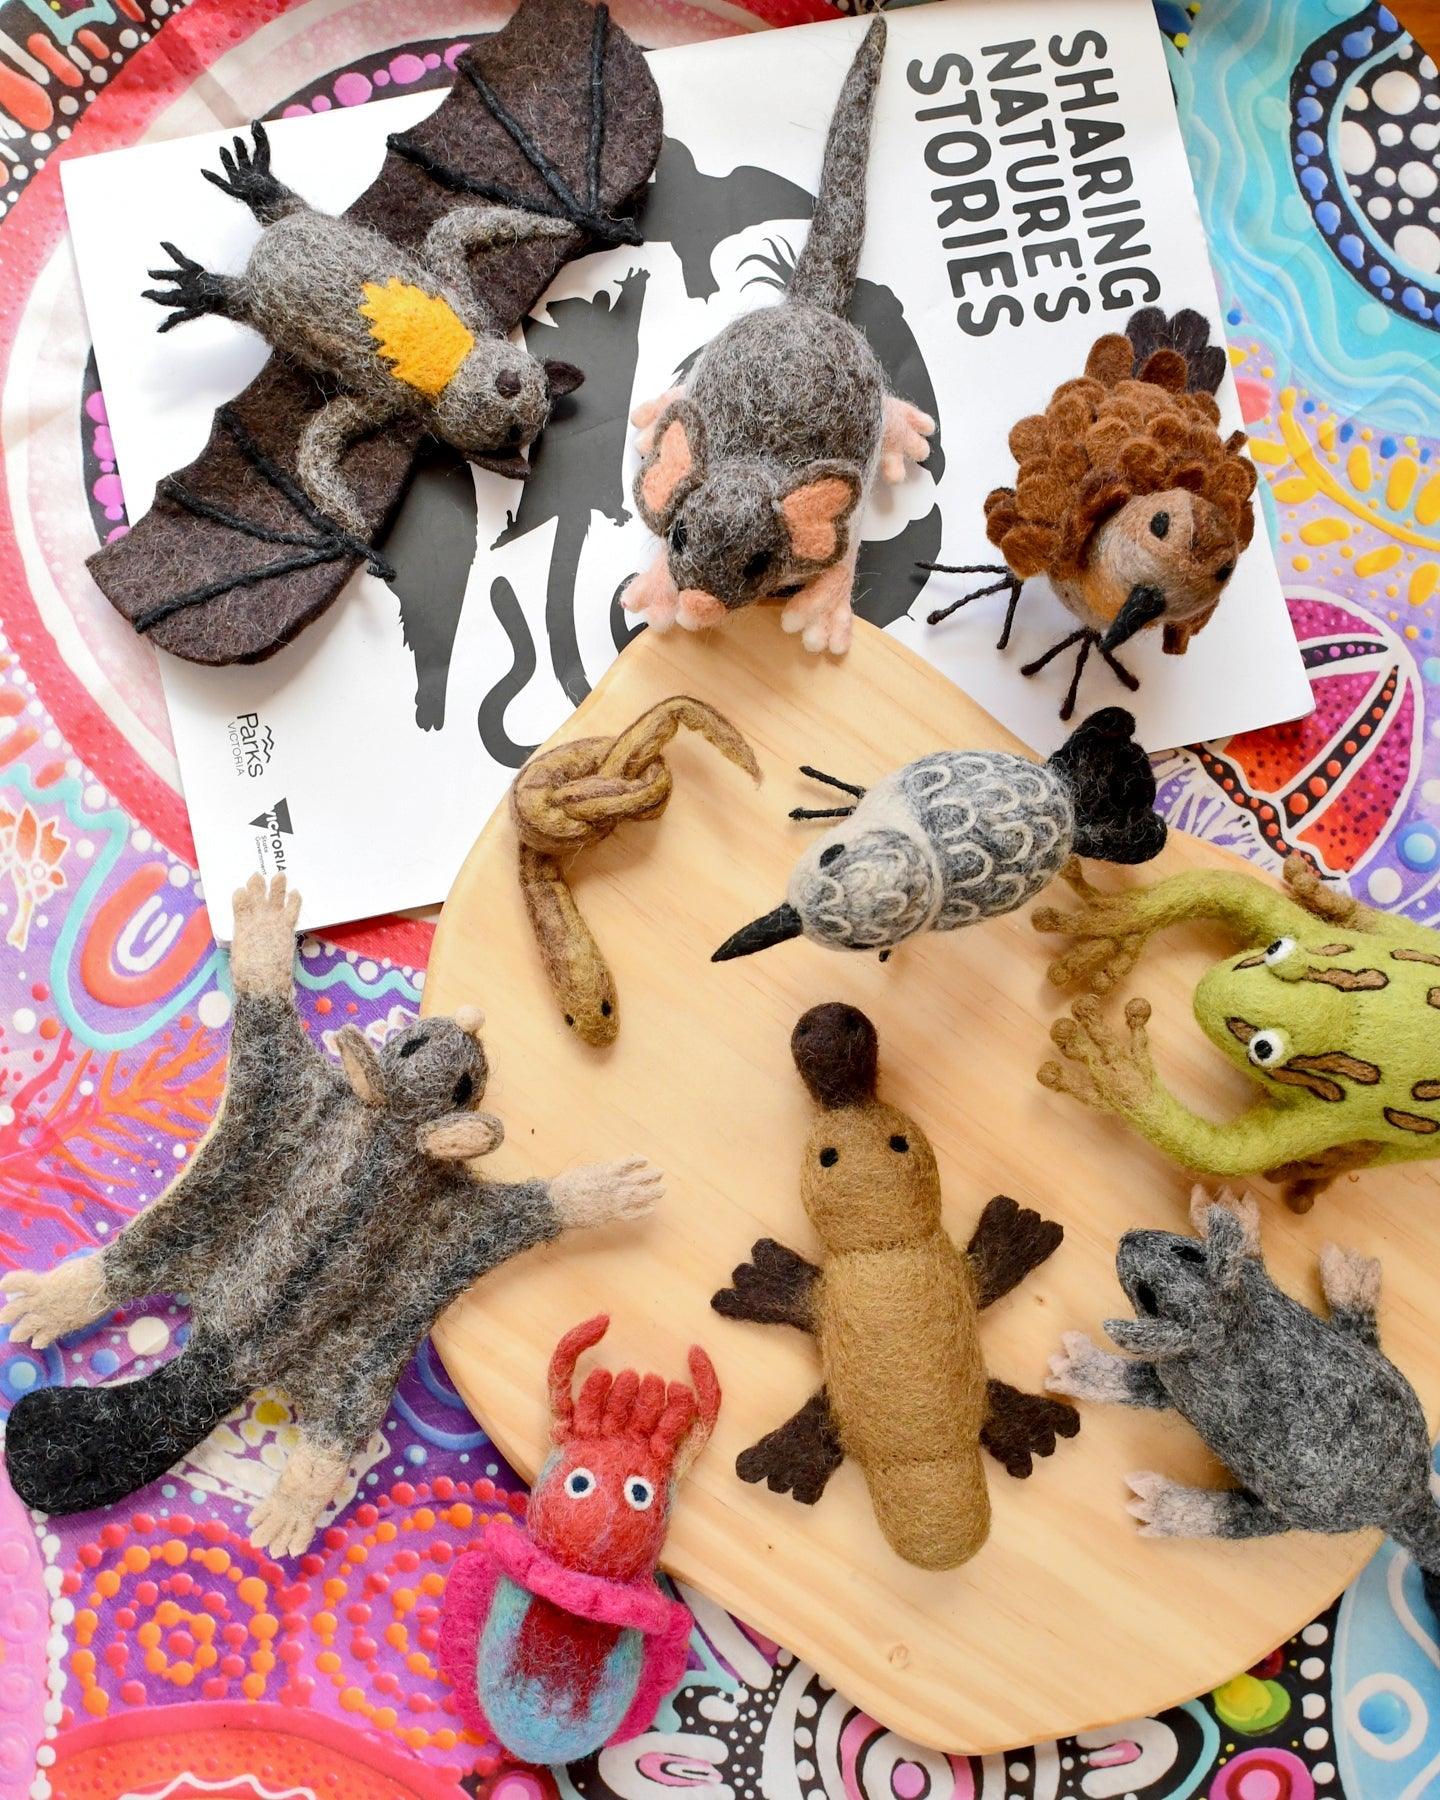 Felt Australian Toy - Malleefowl - Parks Victoria Nature Mascots - Tara Treasures